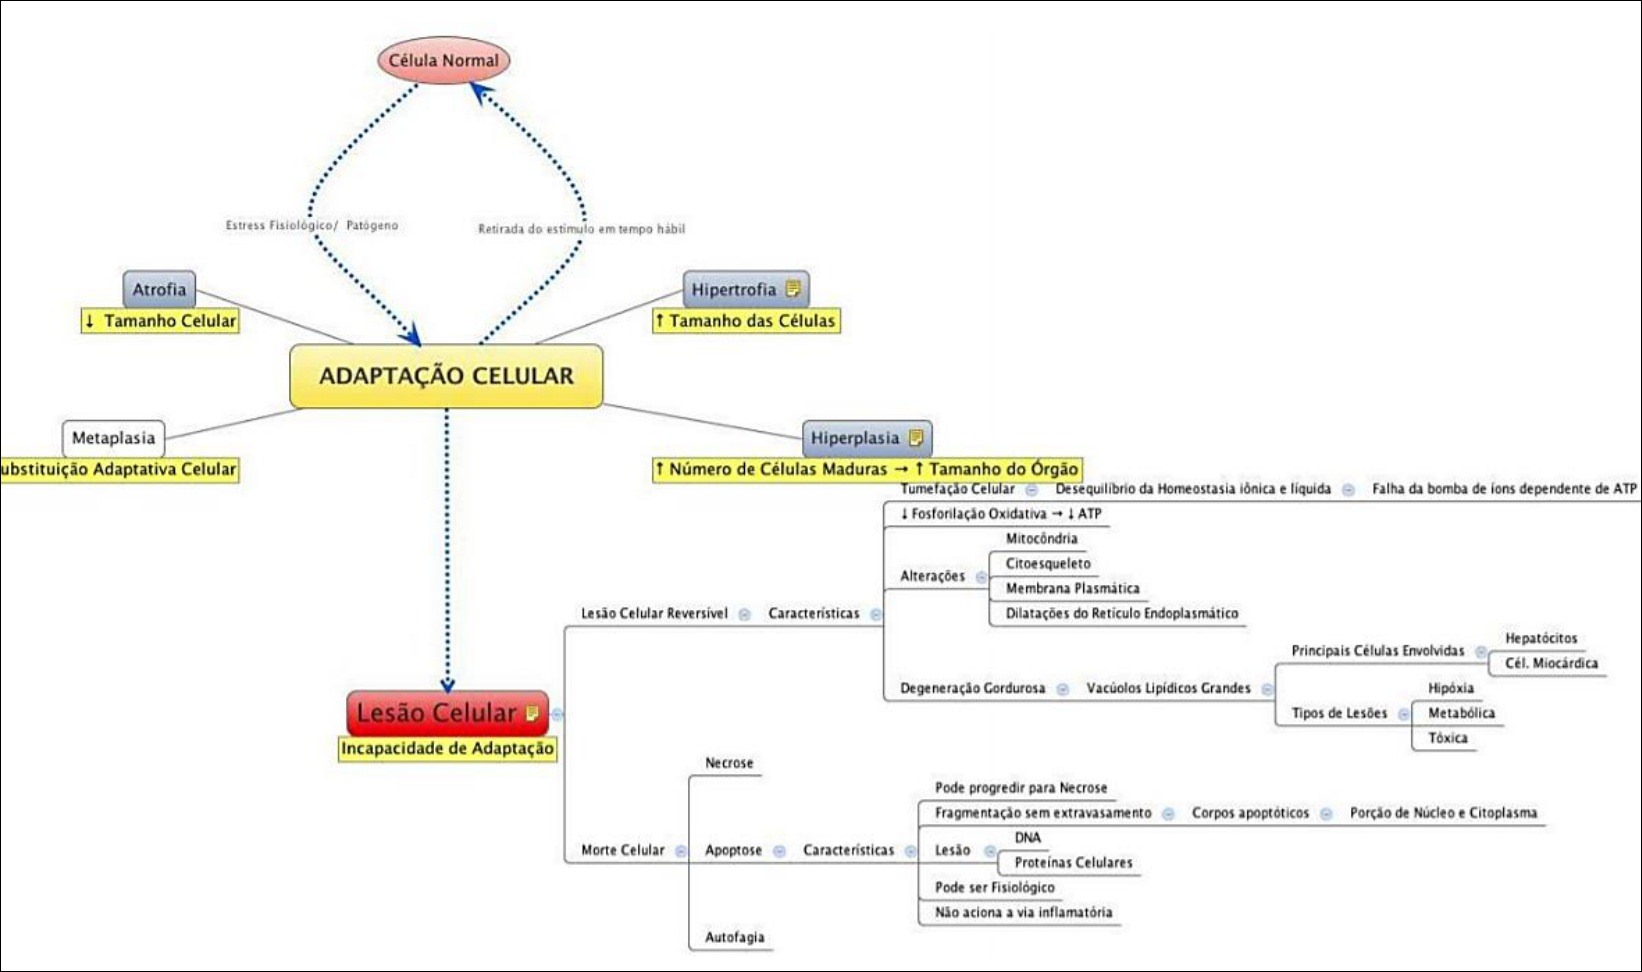 Mapa mental síndrome de Ehlers Danlos - Biologia Celular